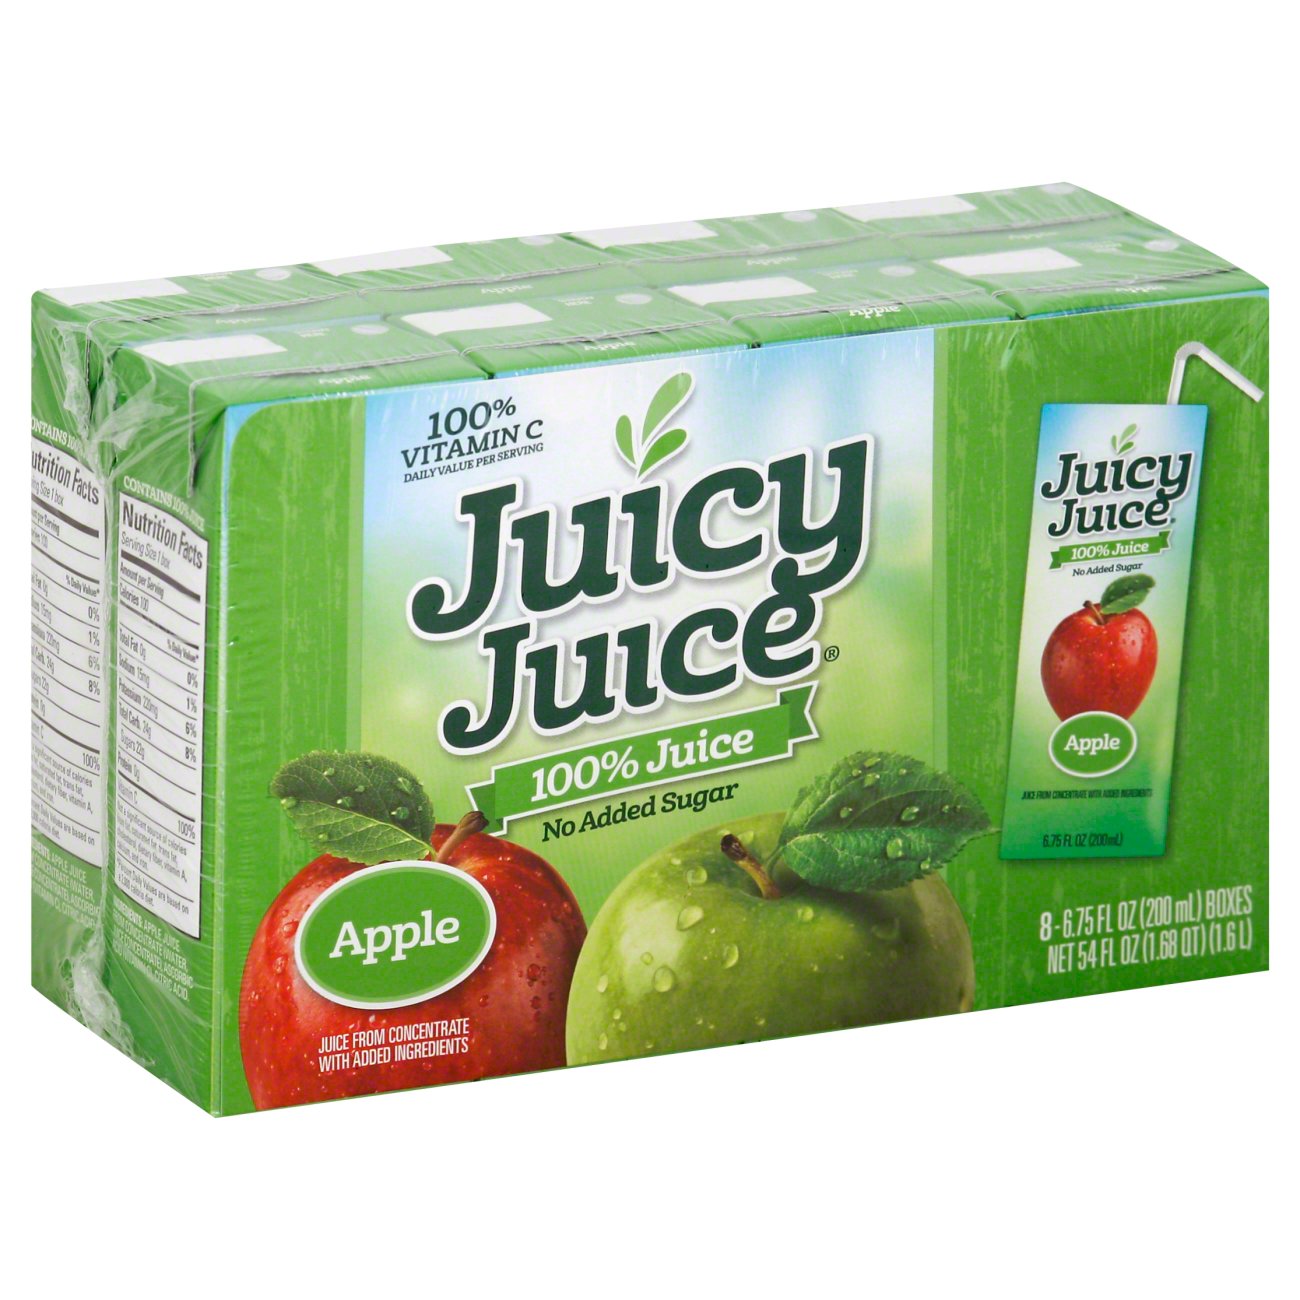 Juicy Juice 100% Apple Juice 6.75 oz Boxes - Shop Juice at ...